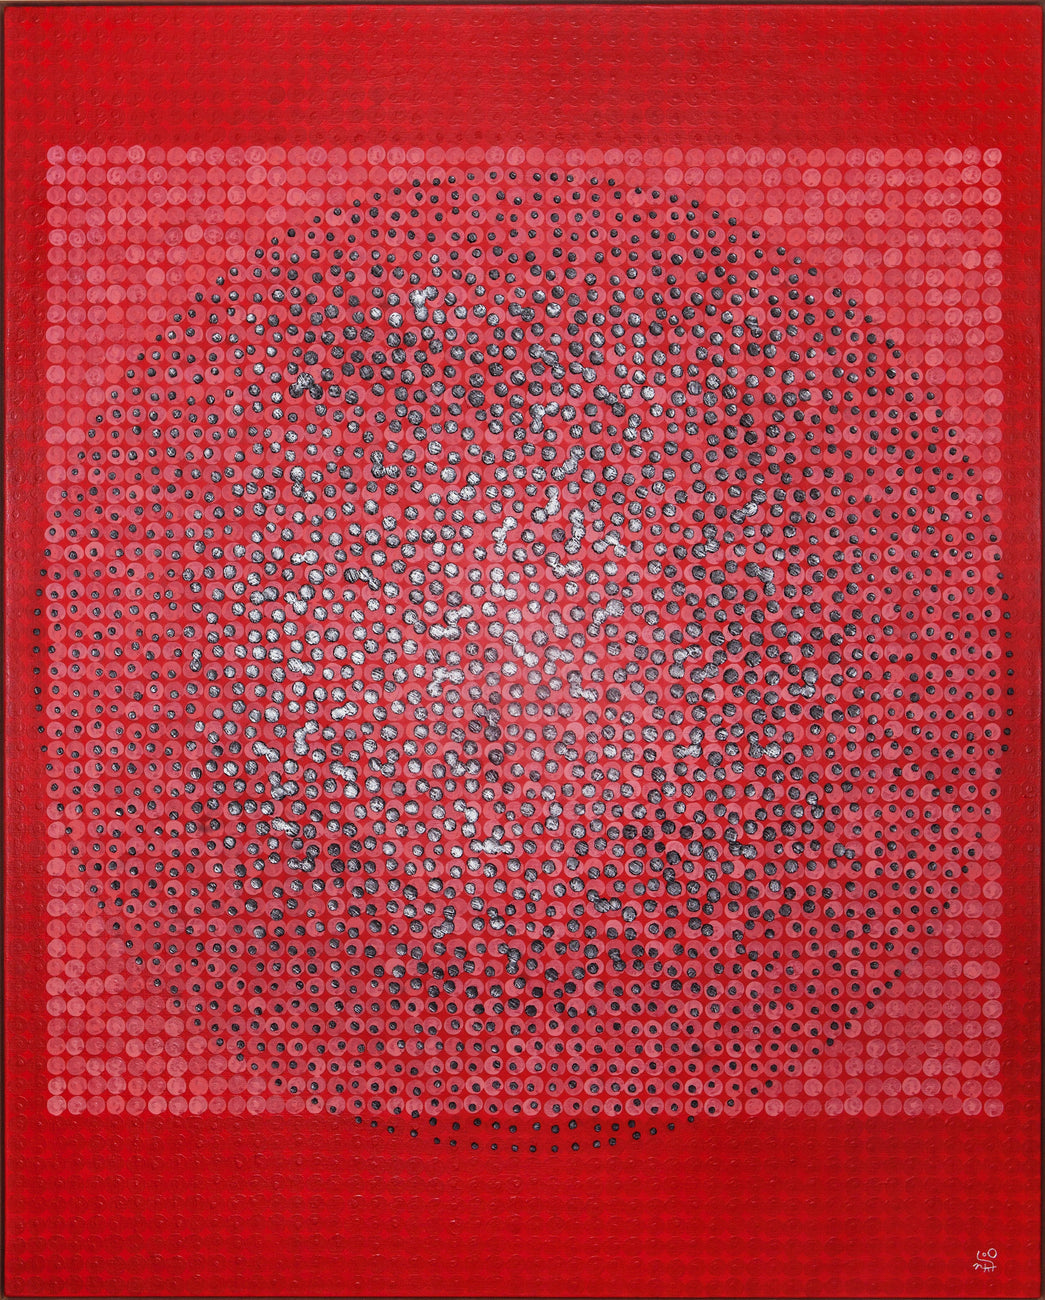 Absence of Ego - Mirage (5-2), SOONIK KWON, 2019Mixed media on canvas, frame162.0 × 132.3 cm